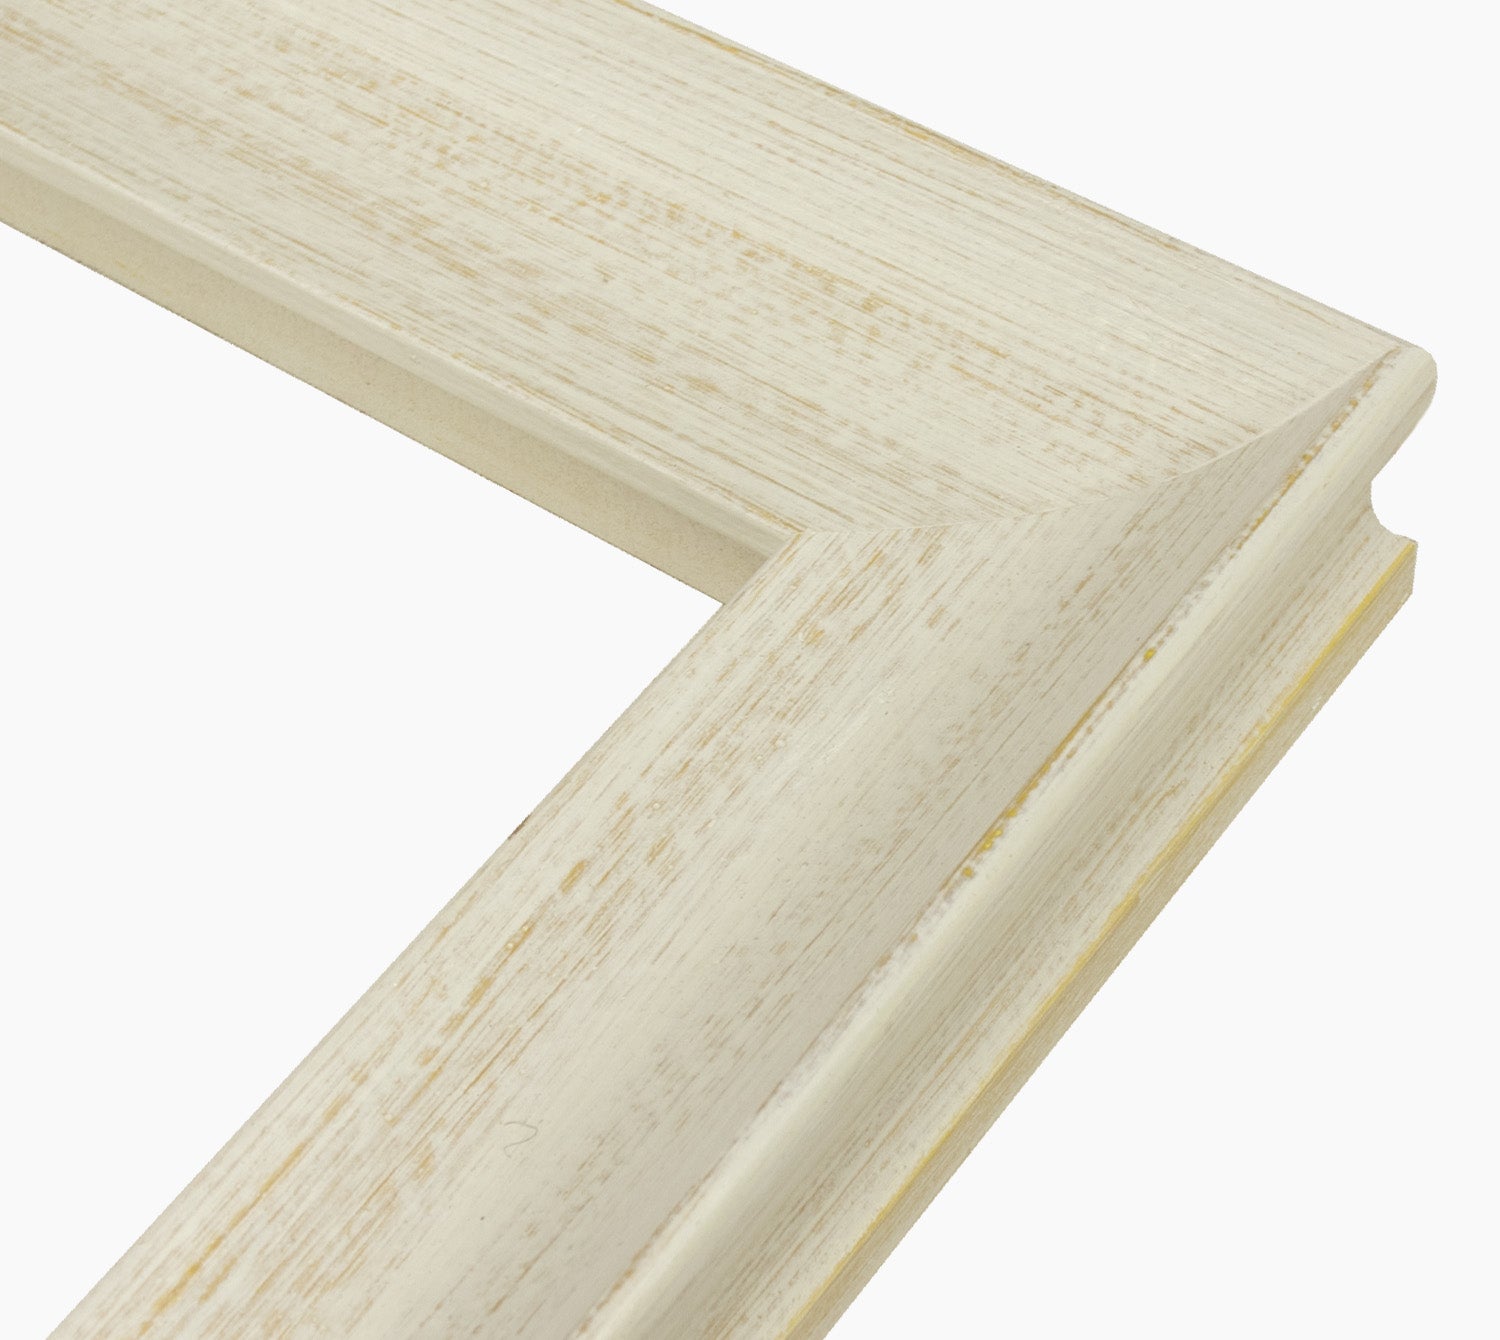 444.915 cadre en bois à fond ocre blanc mesure de profil 65x55 mm Lombarda cornici S.n.c.